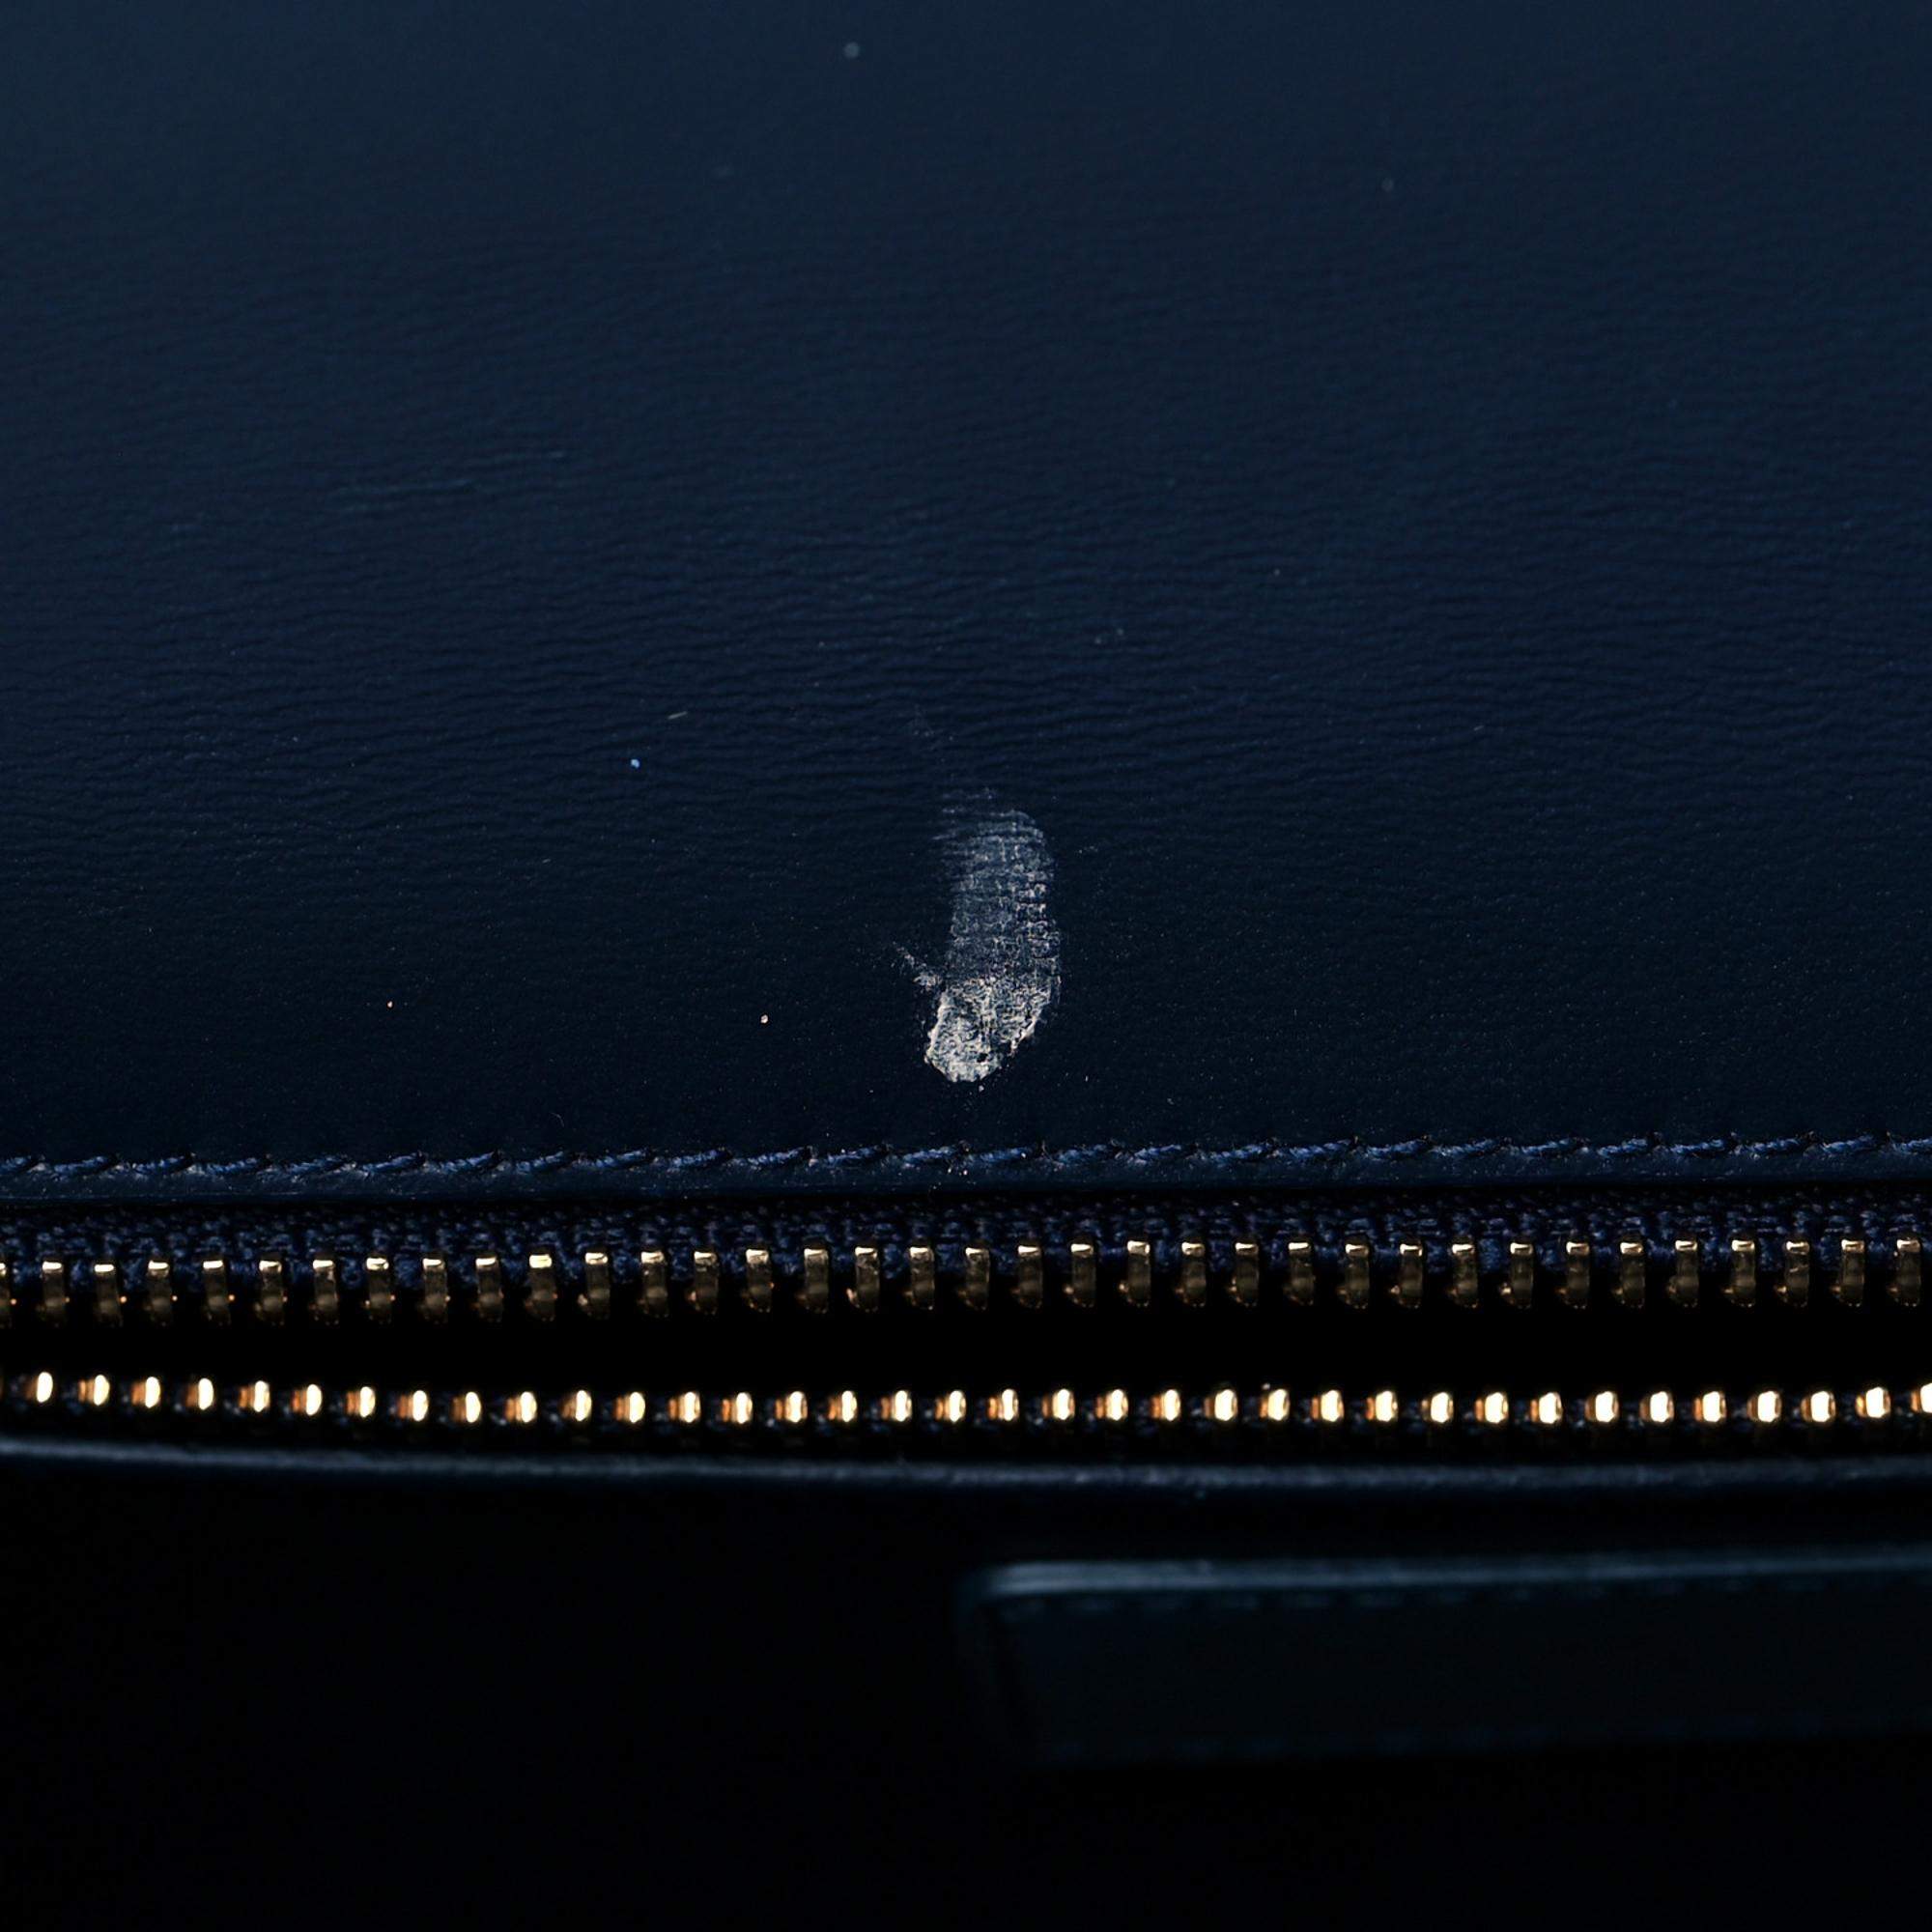 AUTH Dior 30 Montaigne Bag - Indigo Blue Gradient Calfskin